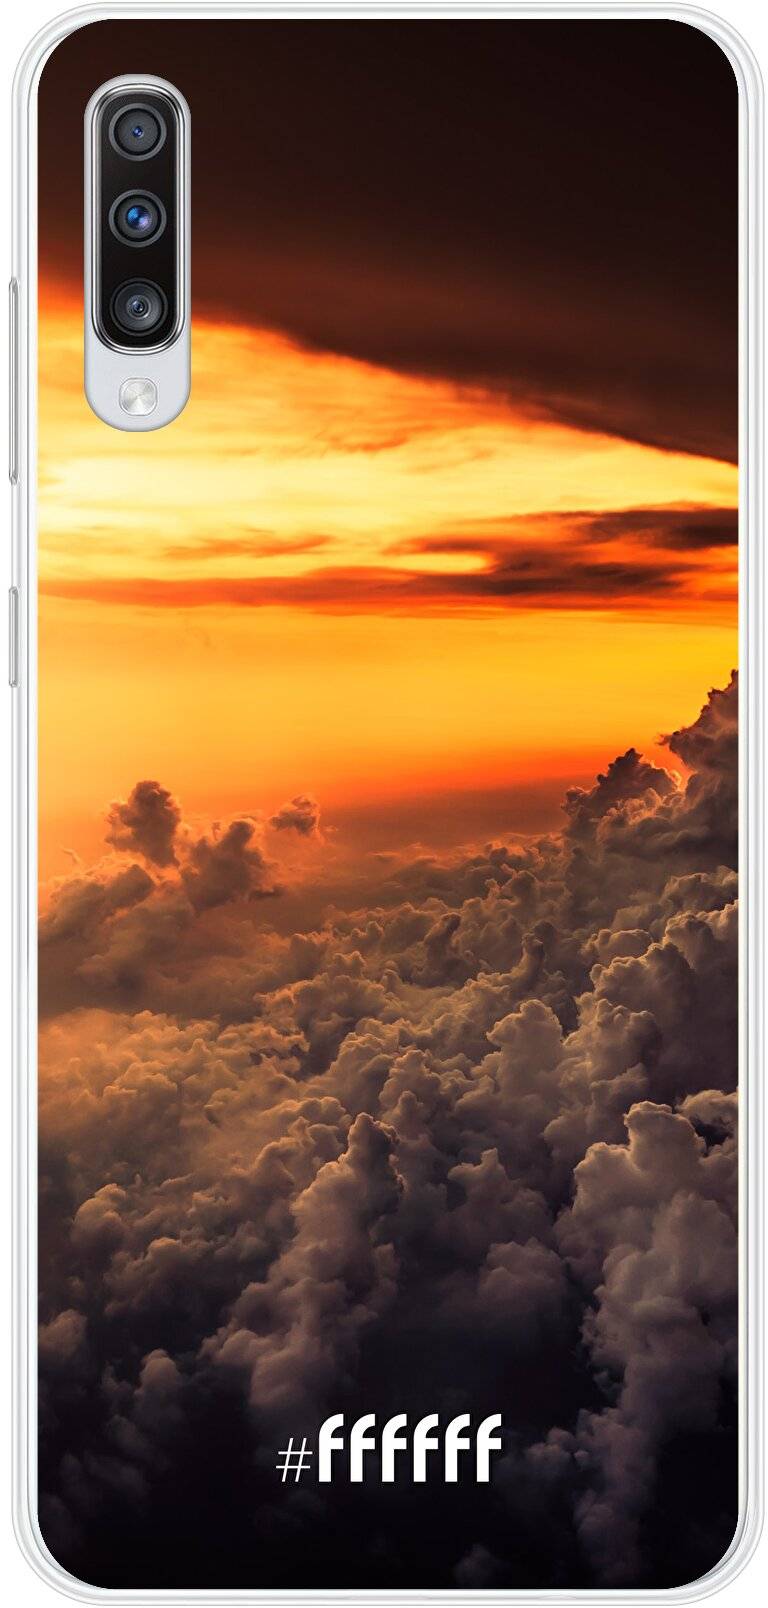 Sea of Clouds Galaxy A70